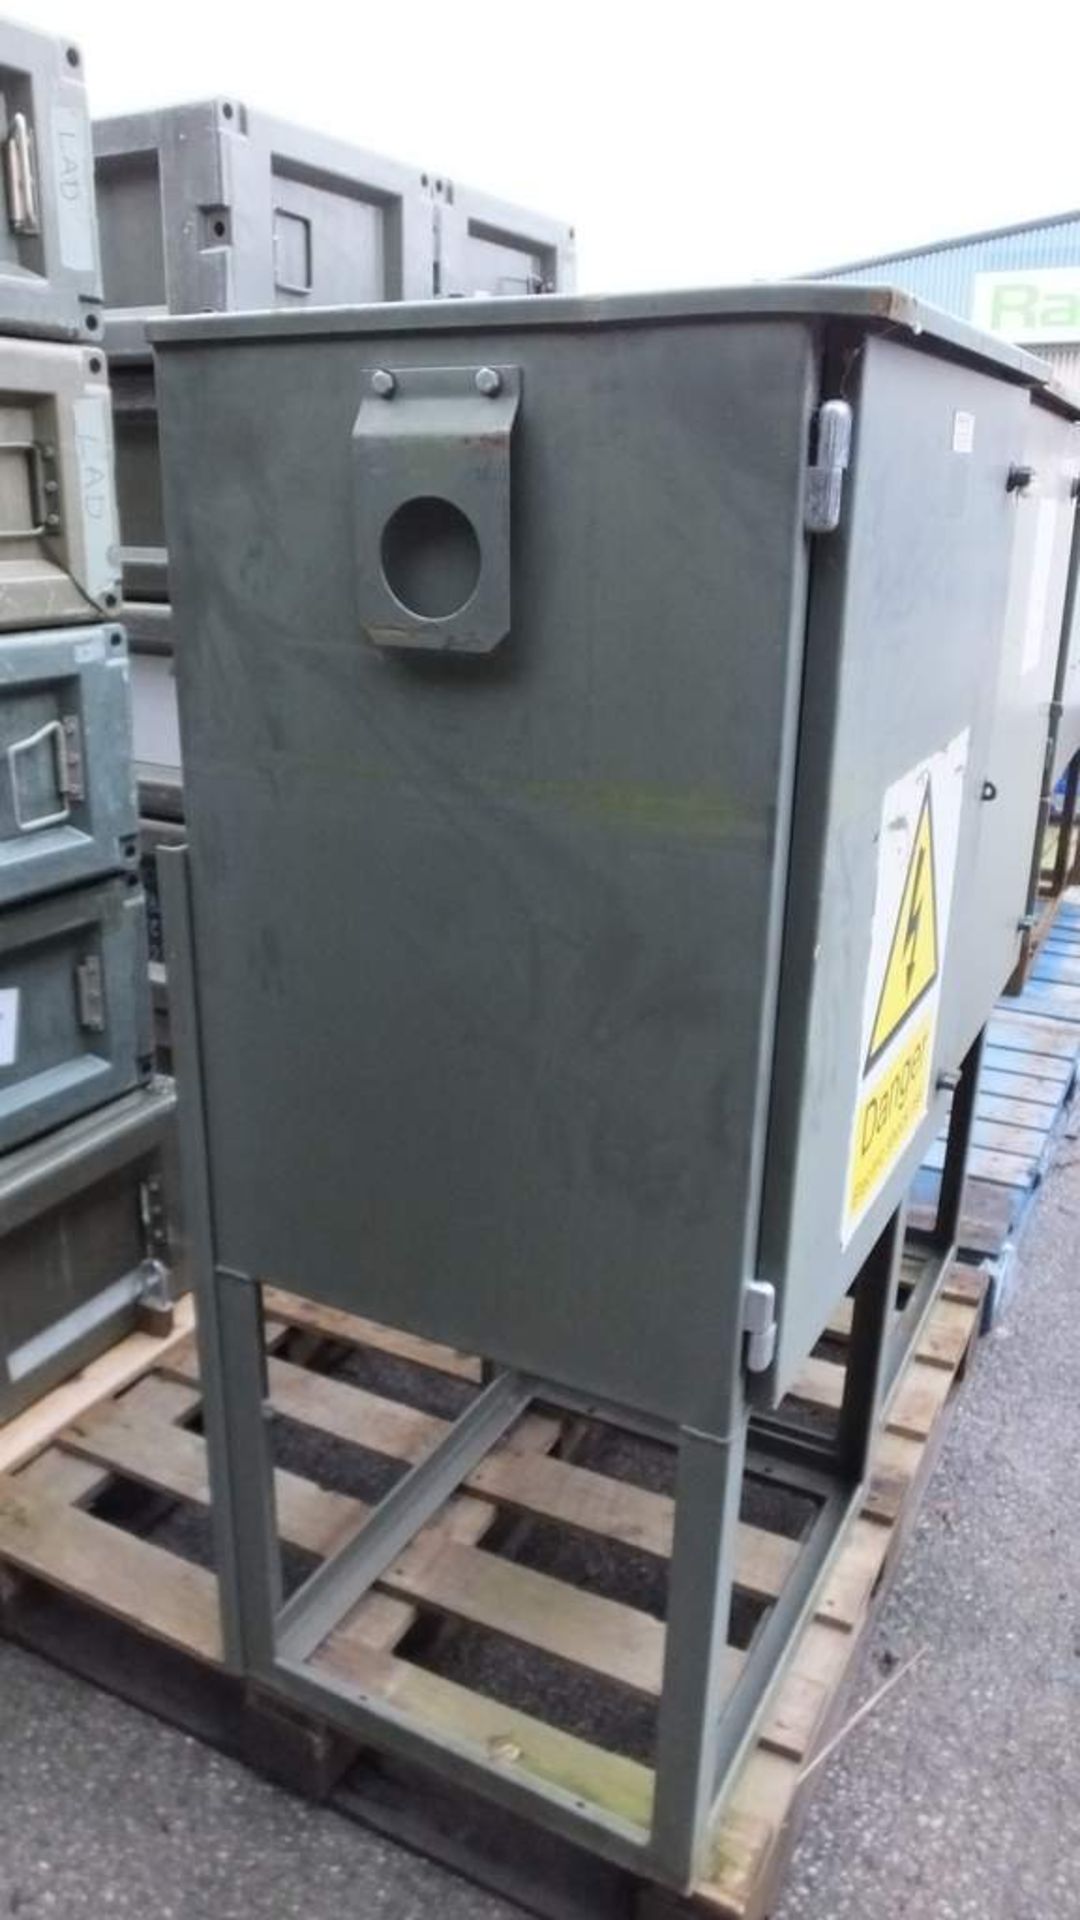 Lewden UCU 415v power distribution boxes - Image 2 of 2